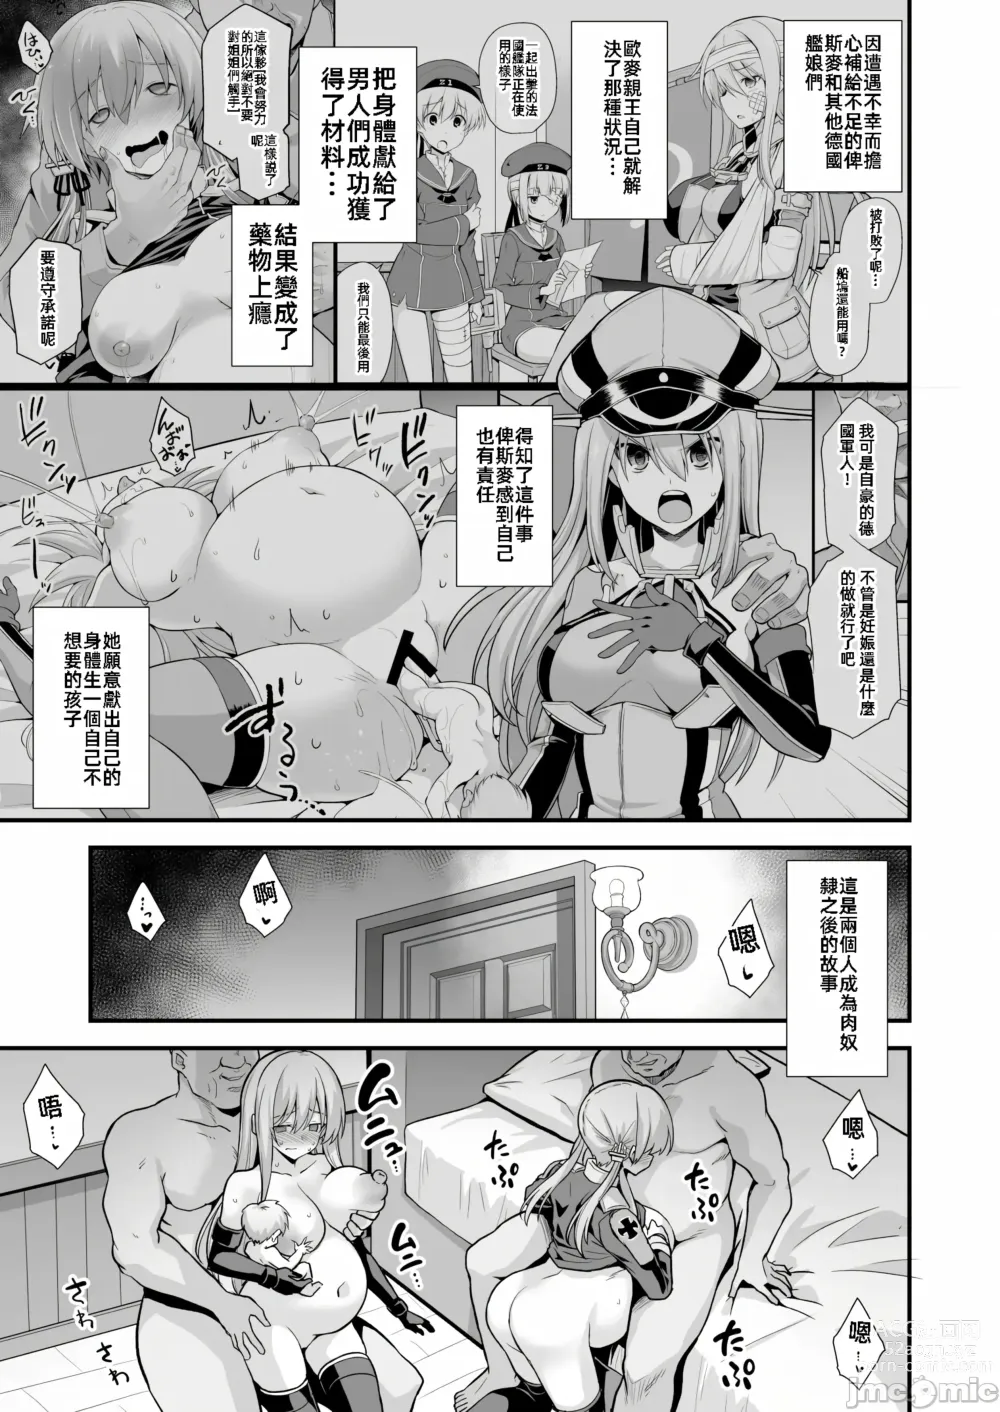 Page 3 of doujinshi Kanmusu Chakunin Mugen Hensai Botai Rankou Prinz Eugen & Bismarck